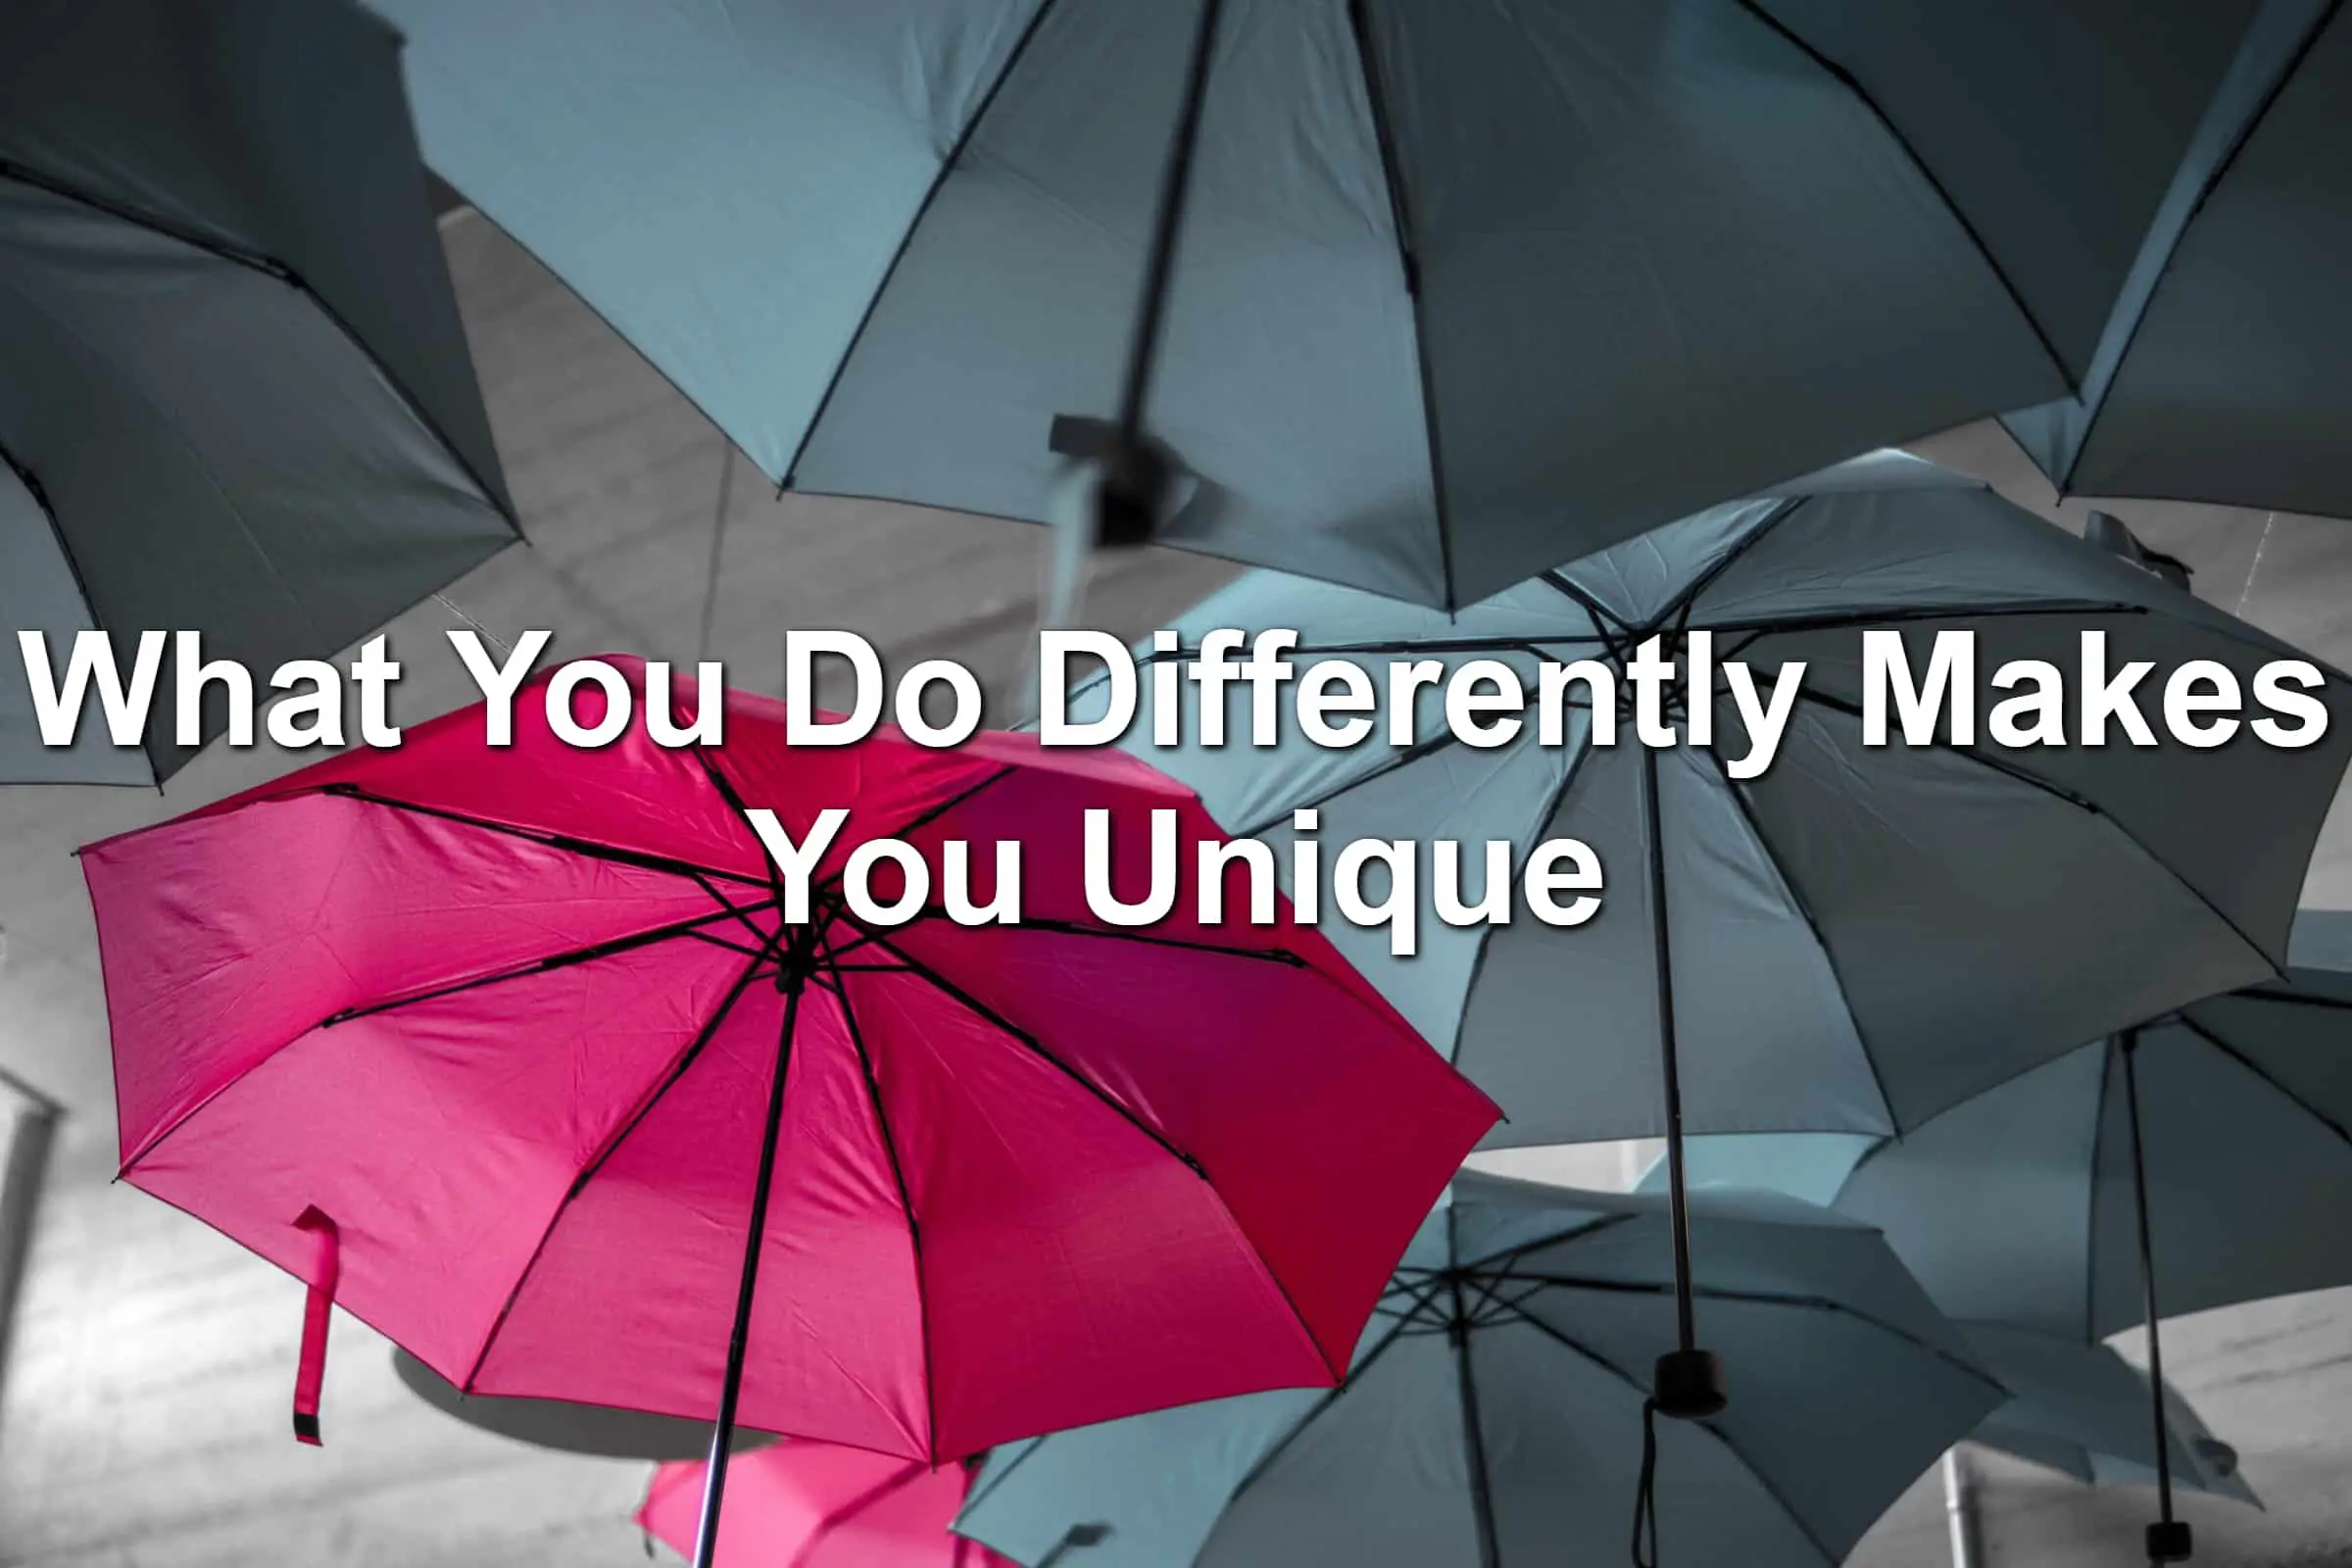 Colorful umbrella in the midst of gray umbrellas